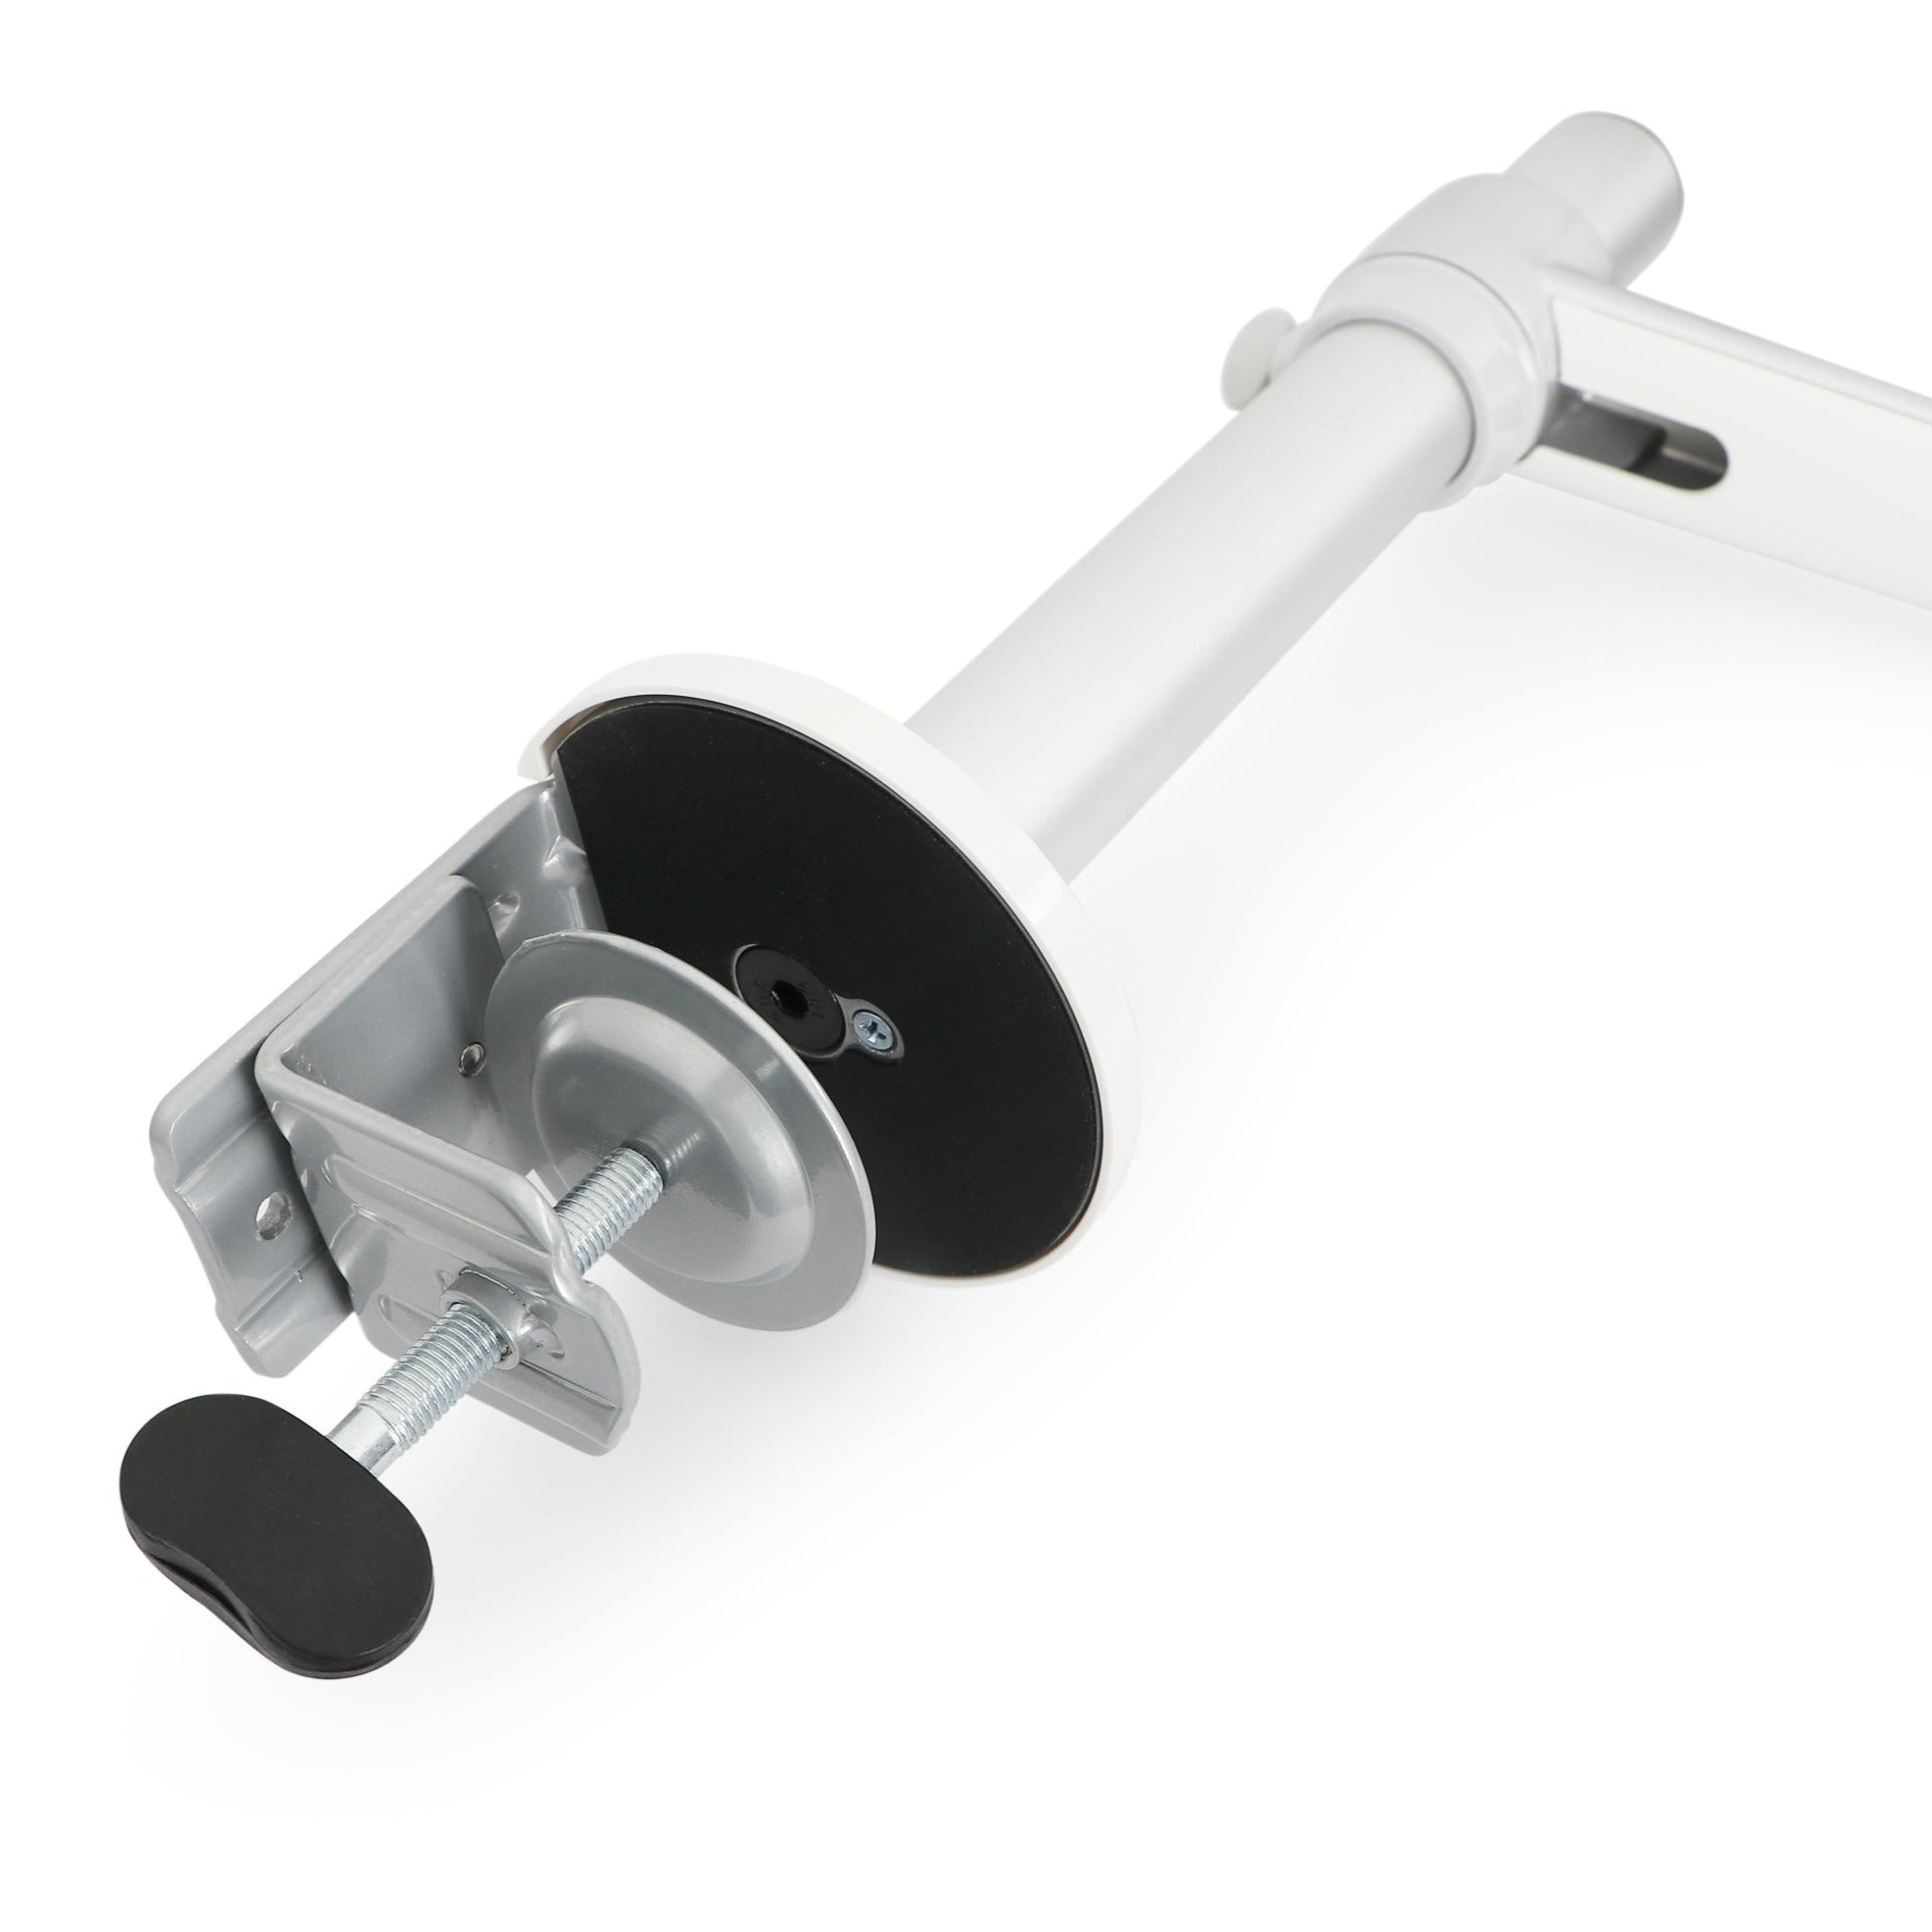 Monitor Arm Desk Mount Single Arm Tilt & Swivel Bracket Silver